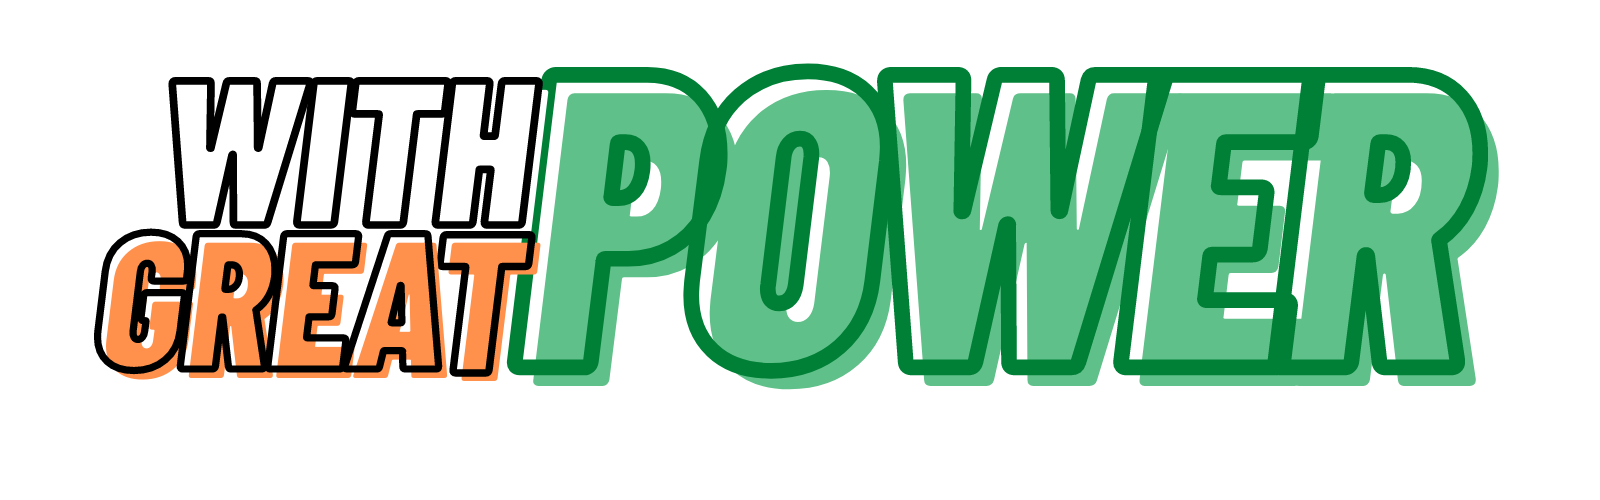 WithGreatPower logo